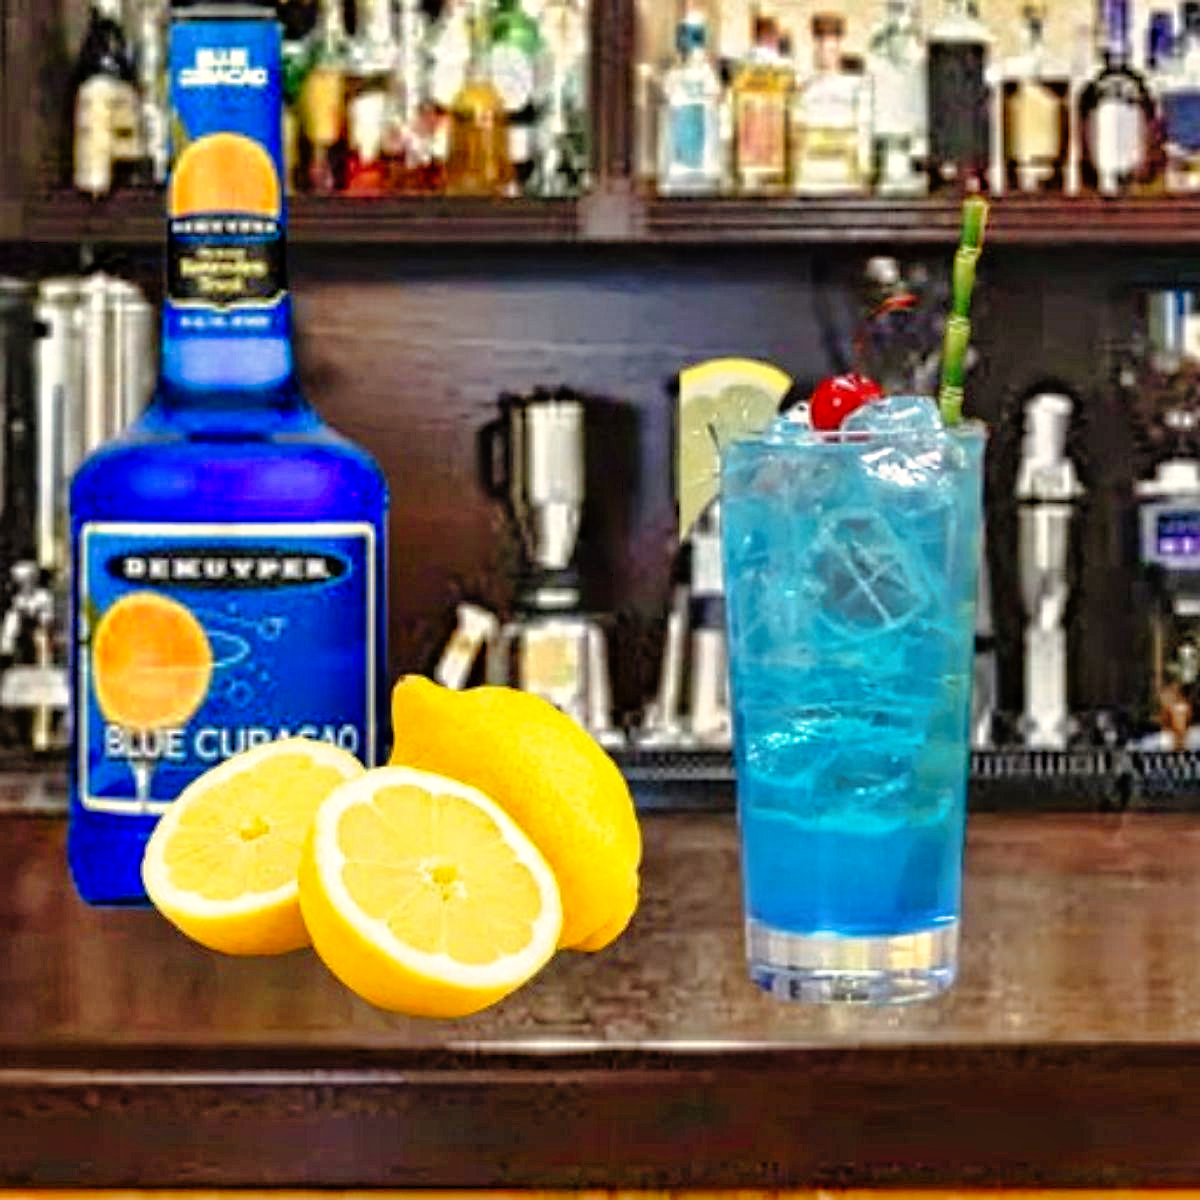 29. Simple Jack Daniel’s Electric Lemonade Party Drink